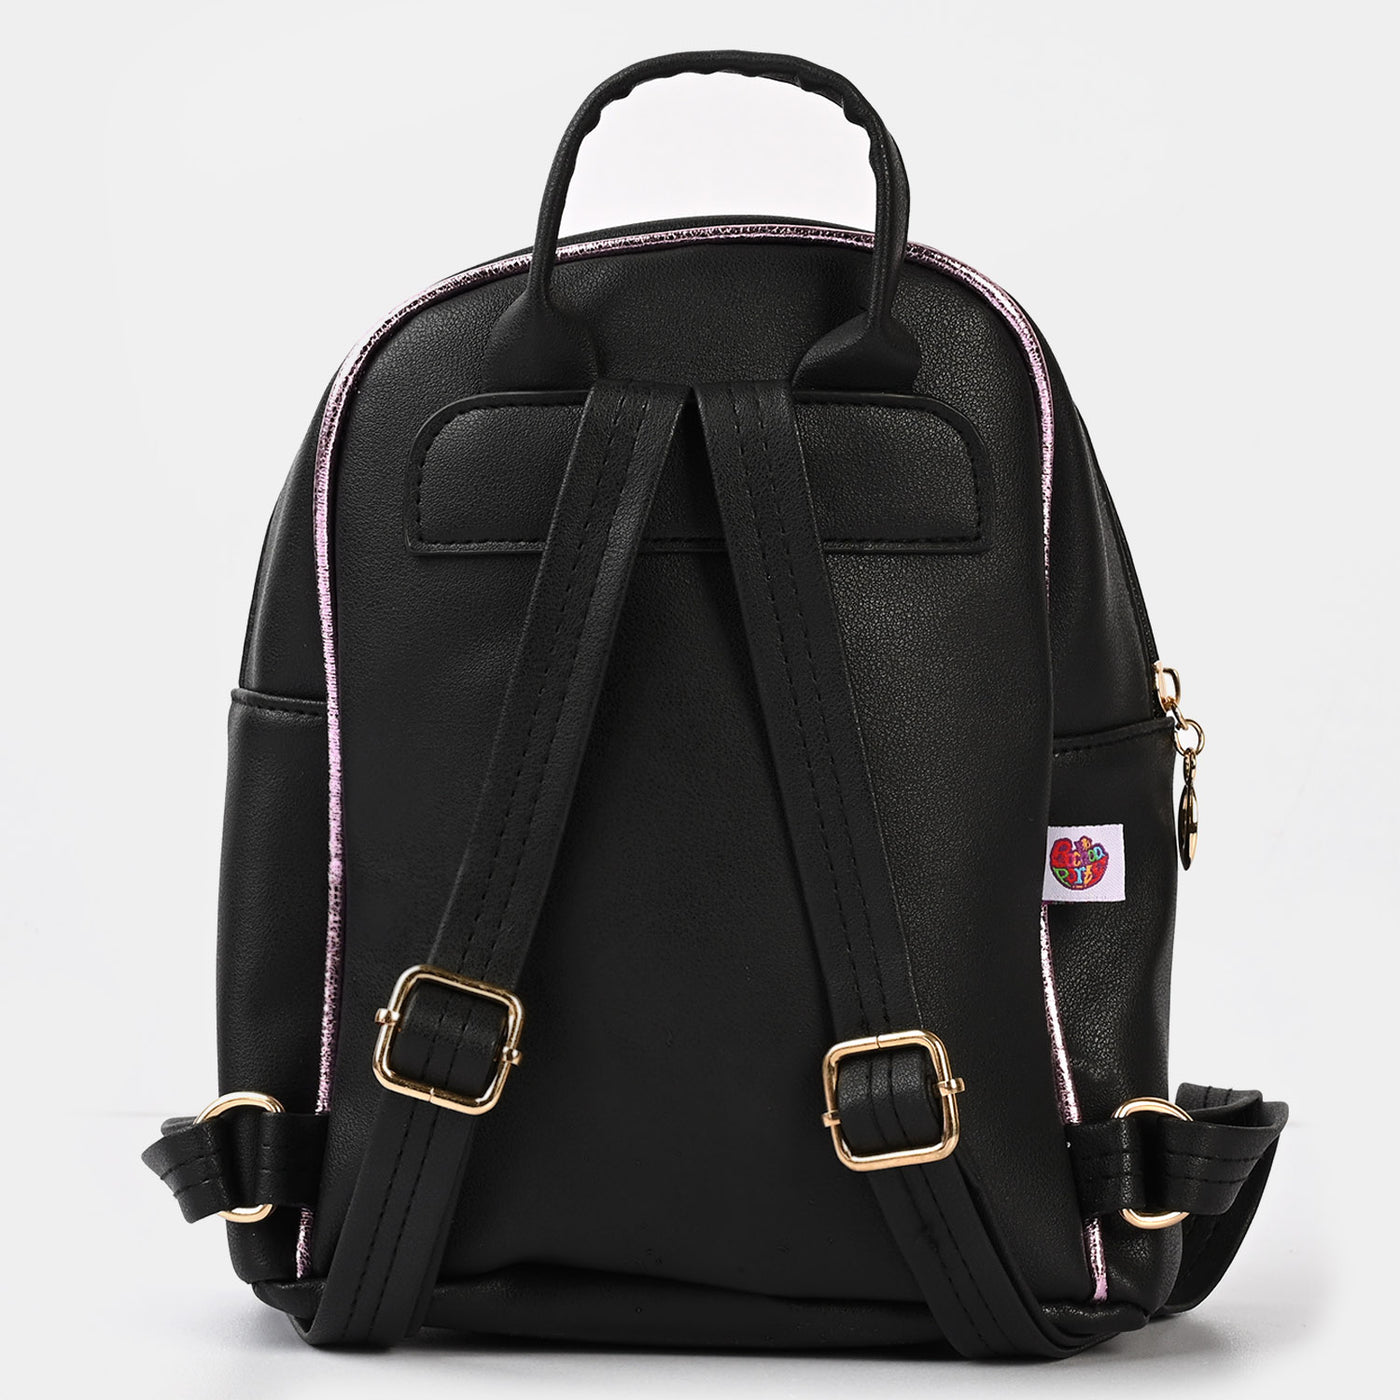 Fancy Backpack Cute Face Design BLACK